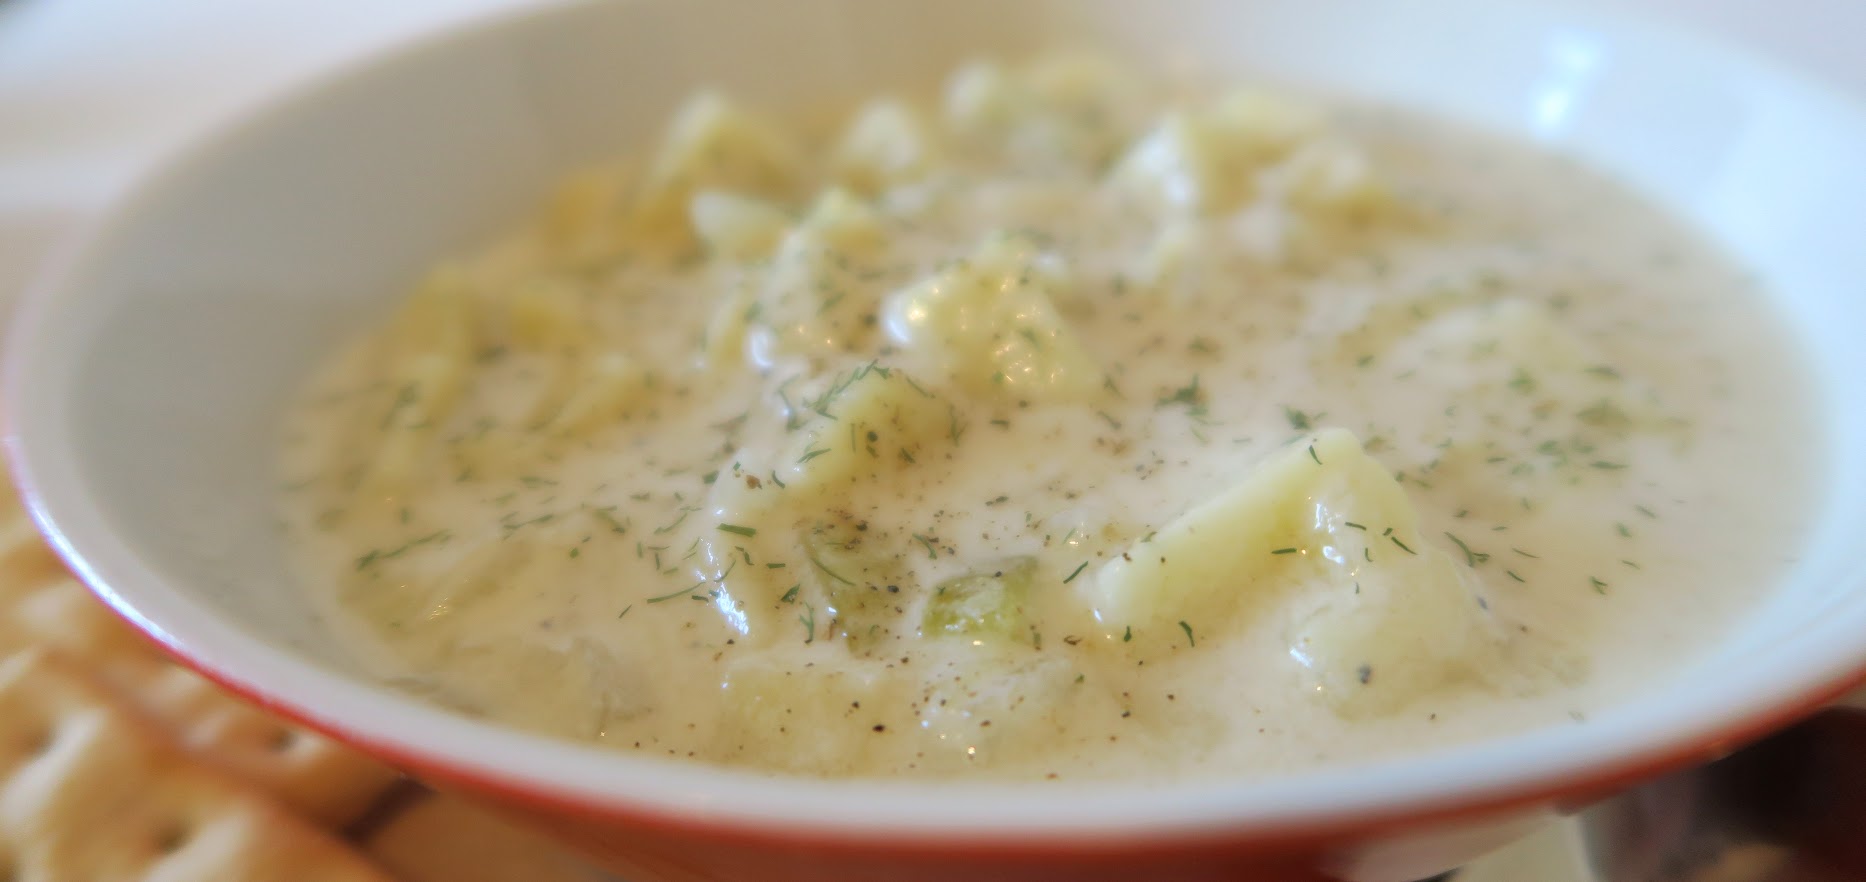 Ukrainian potato soup in a bowl